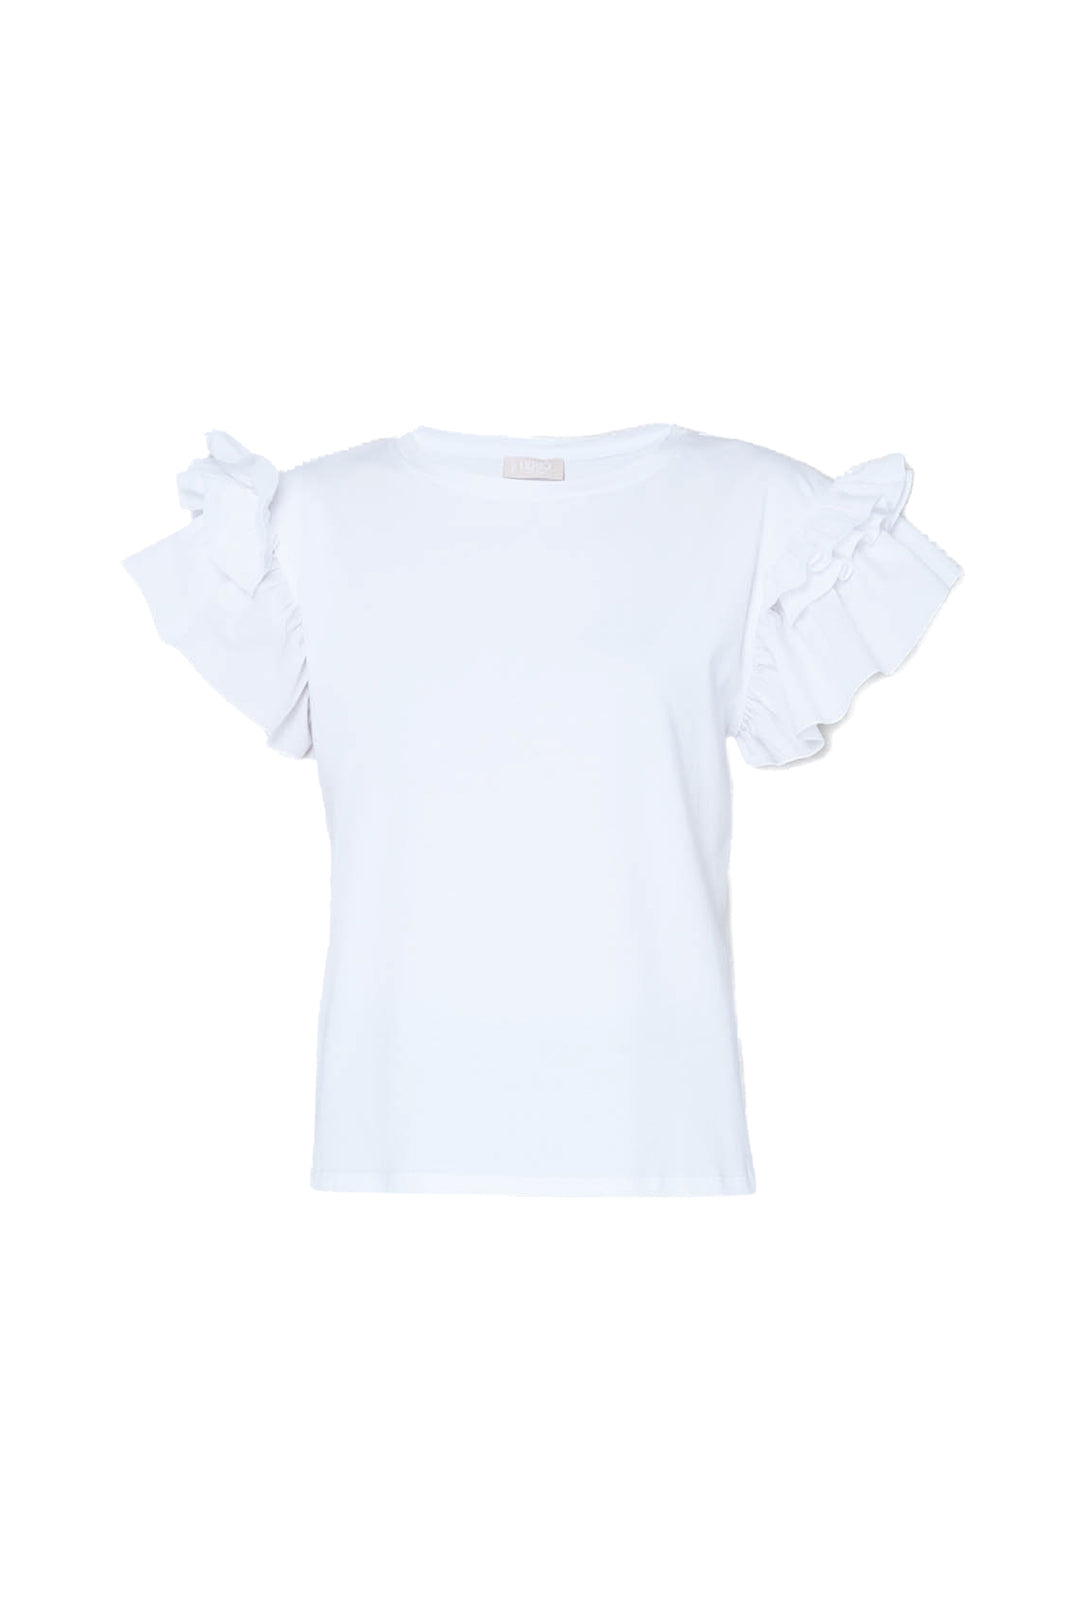 LIU JO T-shirt bianca in cotone con rouches - Mancinelli 1954